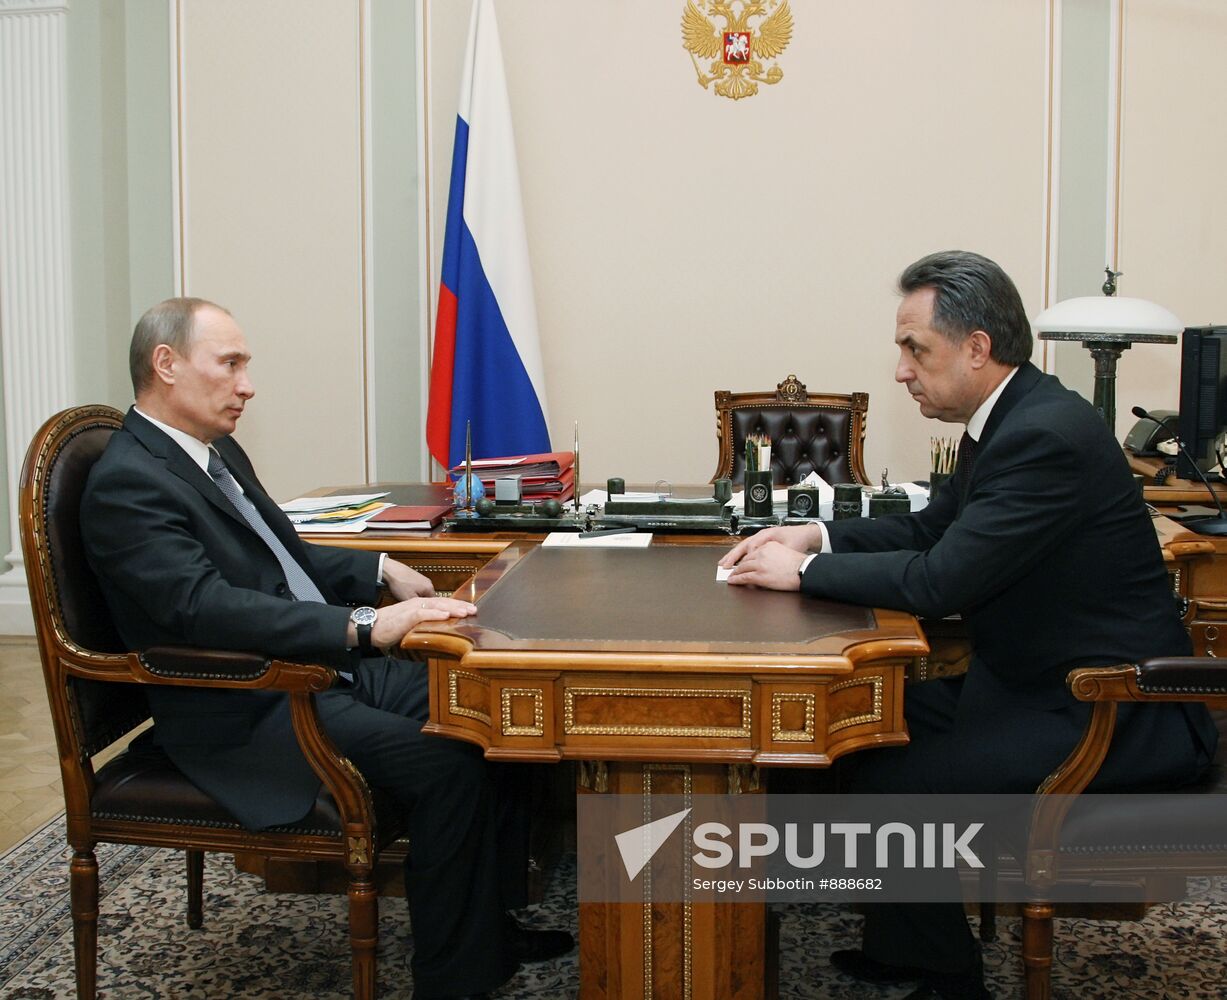 Vladimir Putin meets Vitaly Mutko in Novo-Ogaryovo